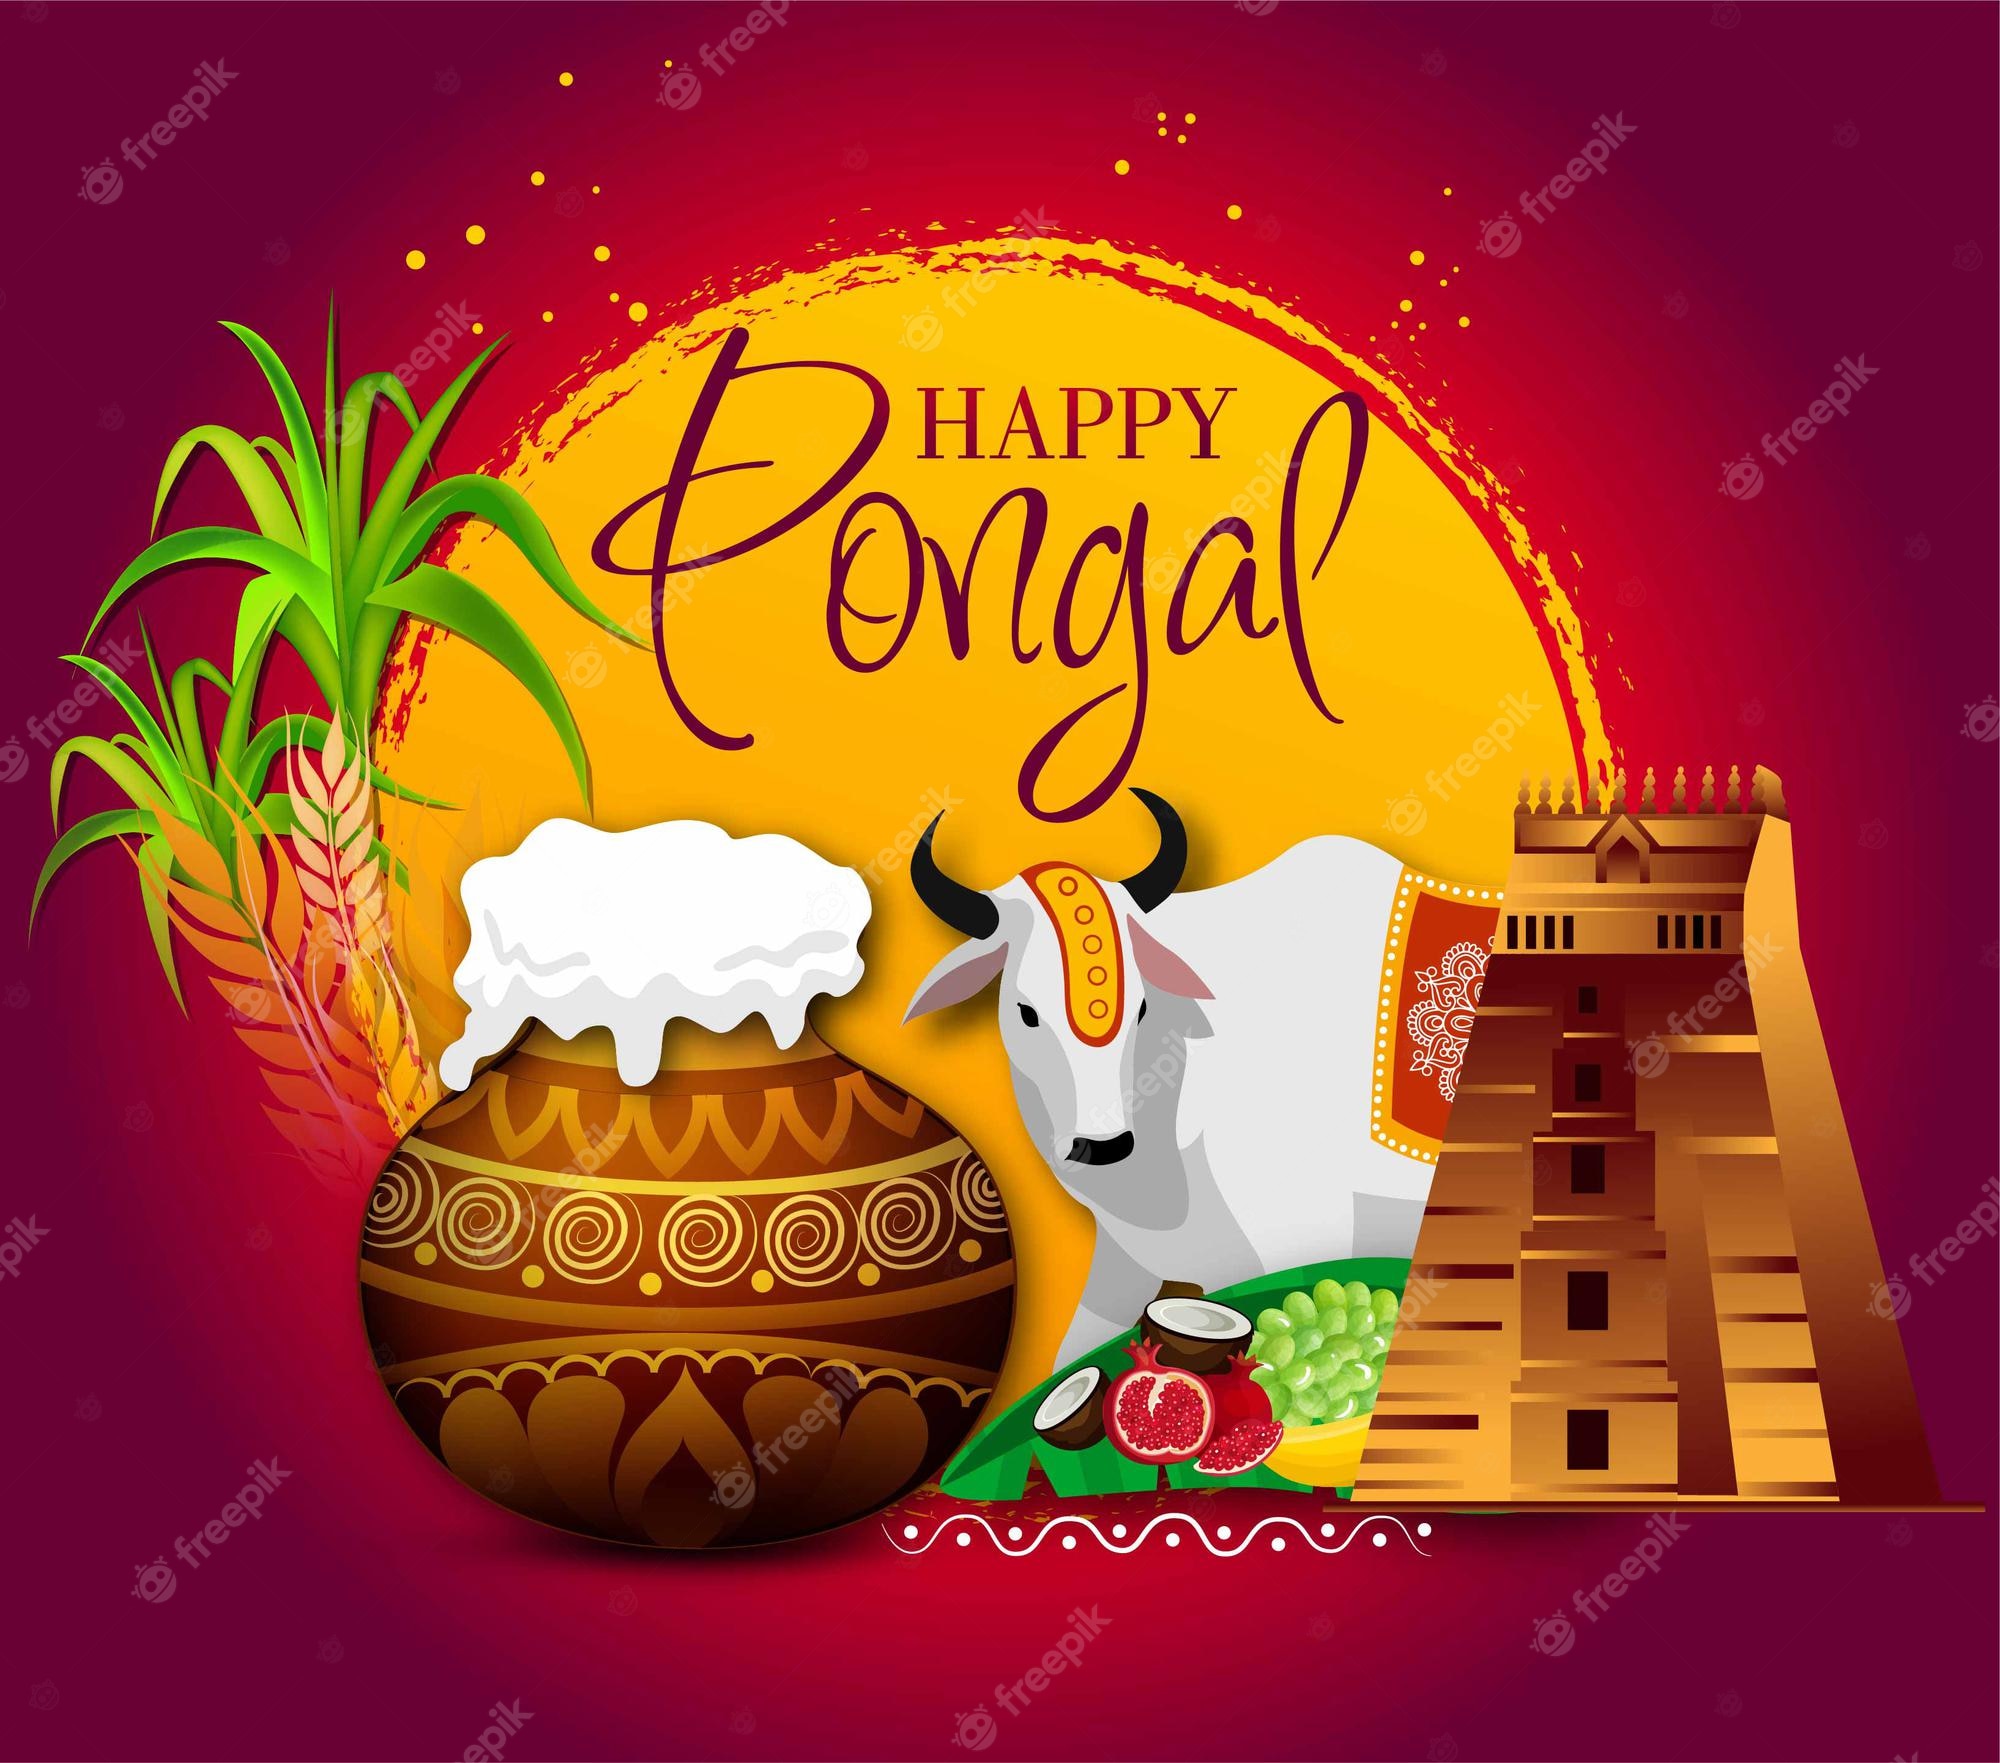 Tamil pongal images